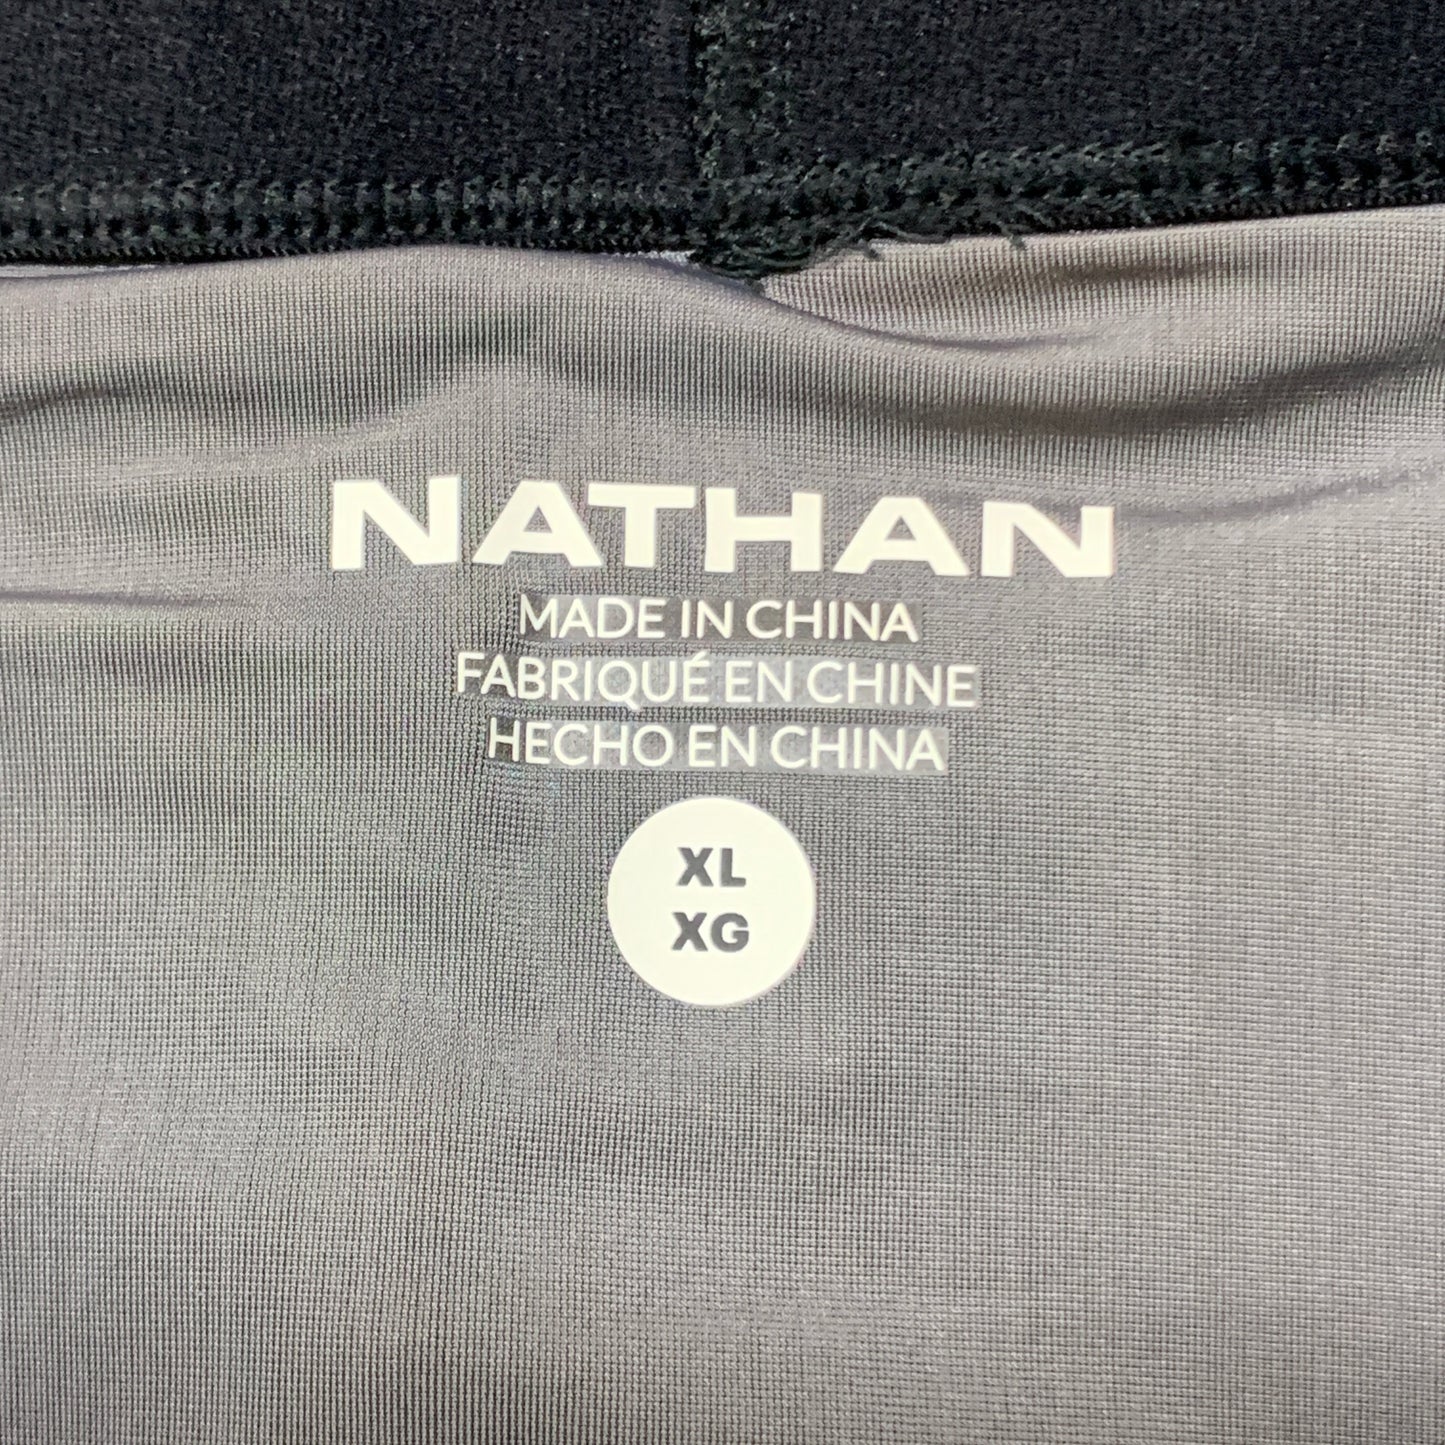 NATHAN Front Runner Shorts 5" Inseam Men's Charcoal Size XL NS70100-80003-XL